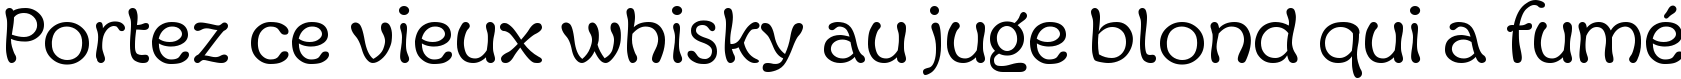 Пример написания шрифтом Margot текста на французском